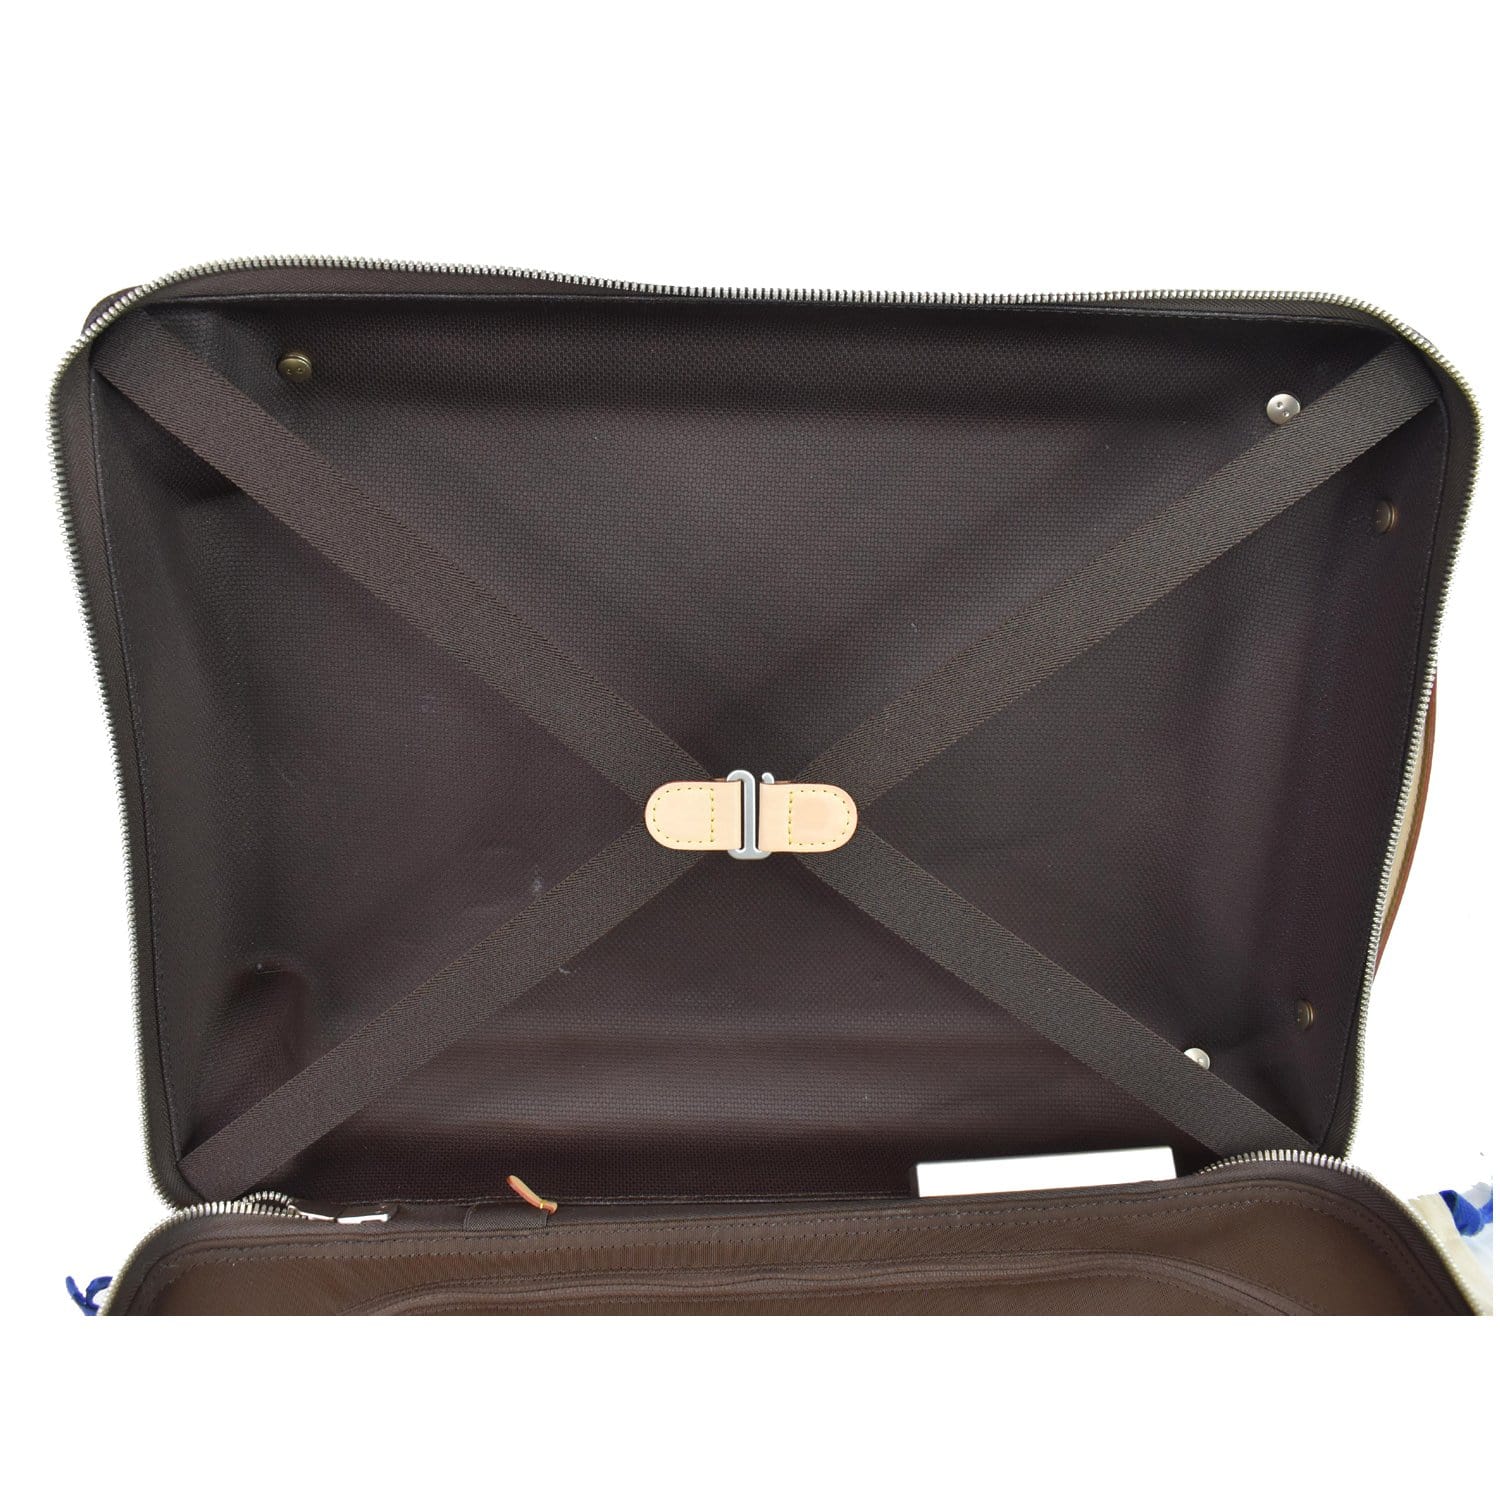 Louis Vuitton Horizon 50 NEW Rolling Luggage Suitcase